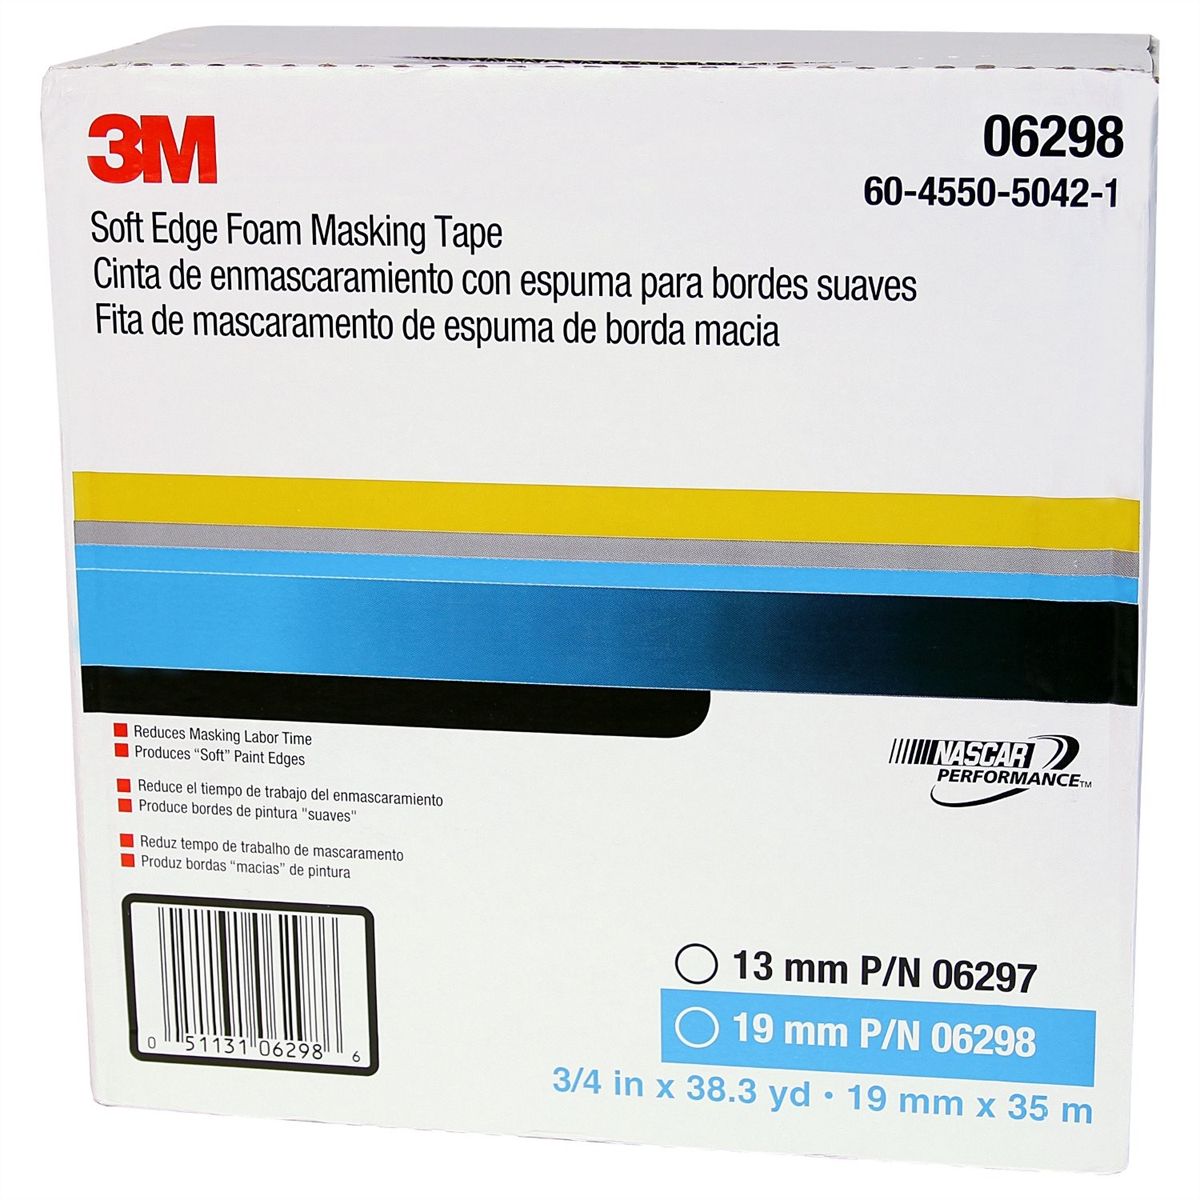 3M Soft Edge Foam Masking Tape D.A.R.T. 19mm